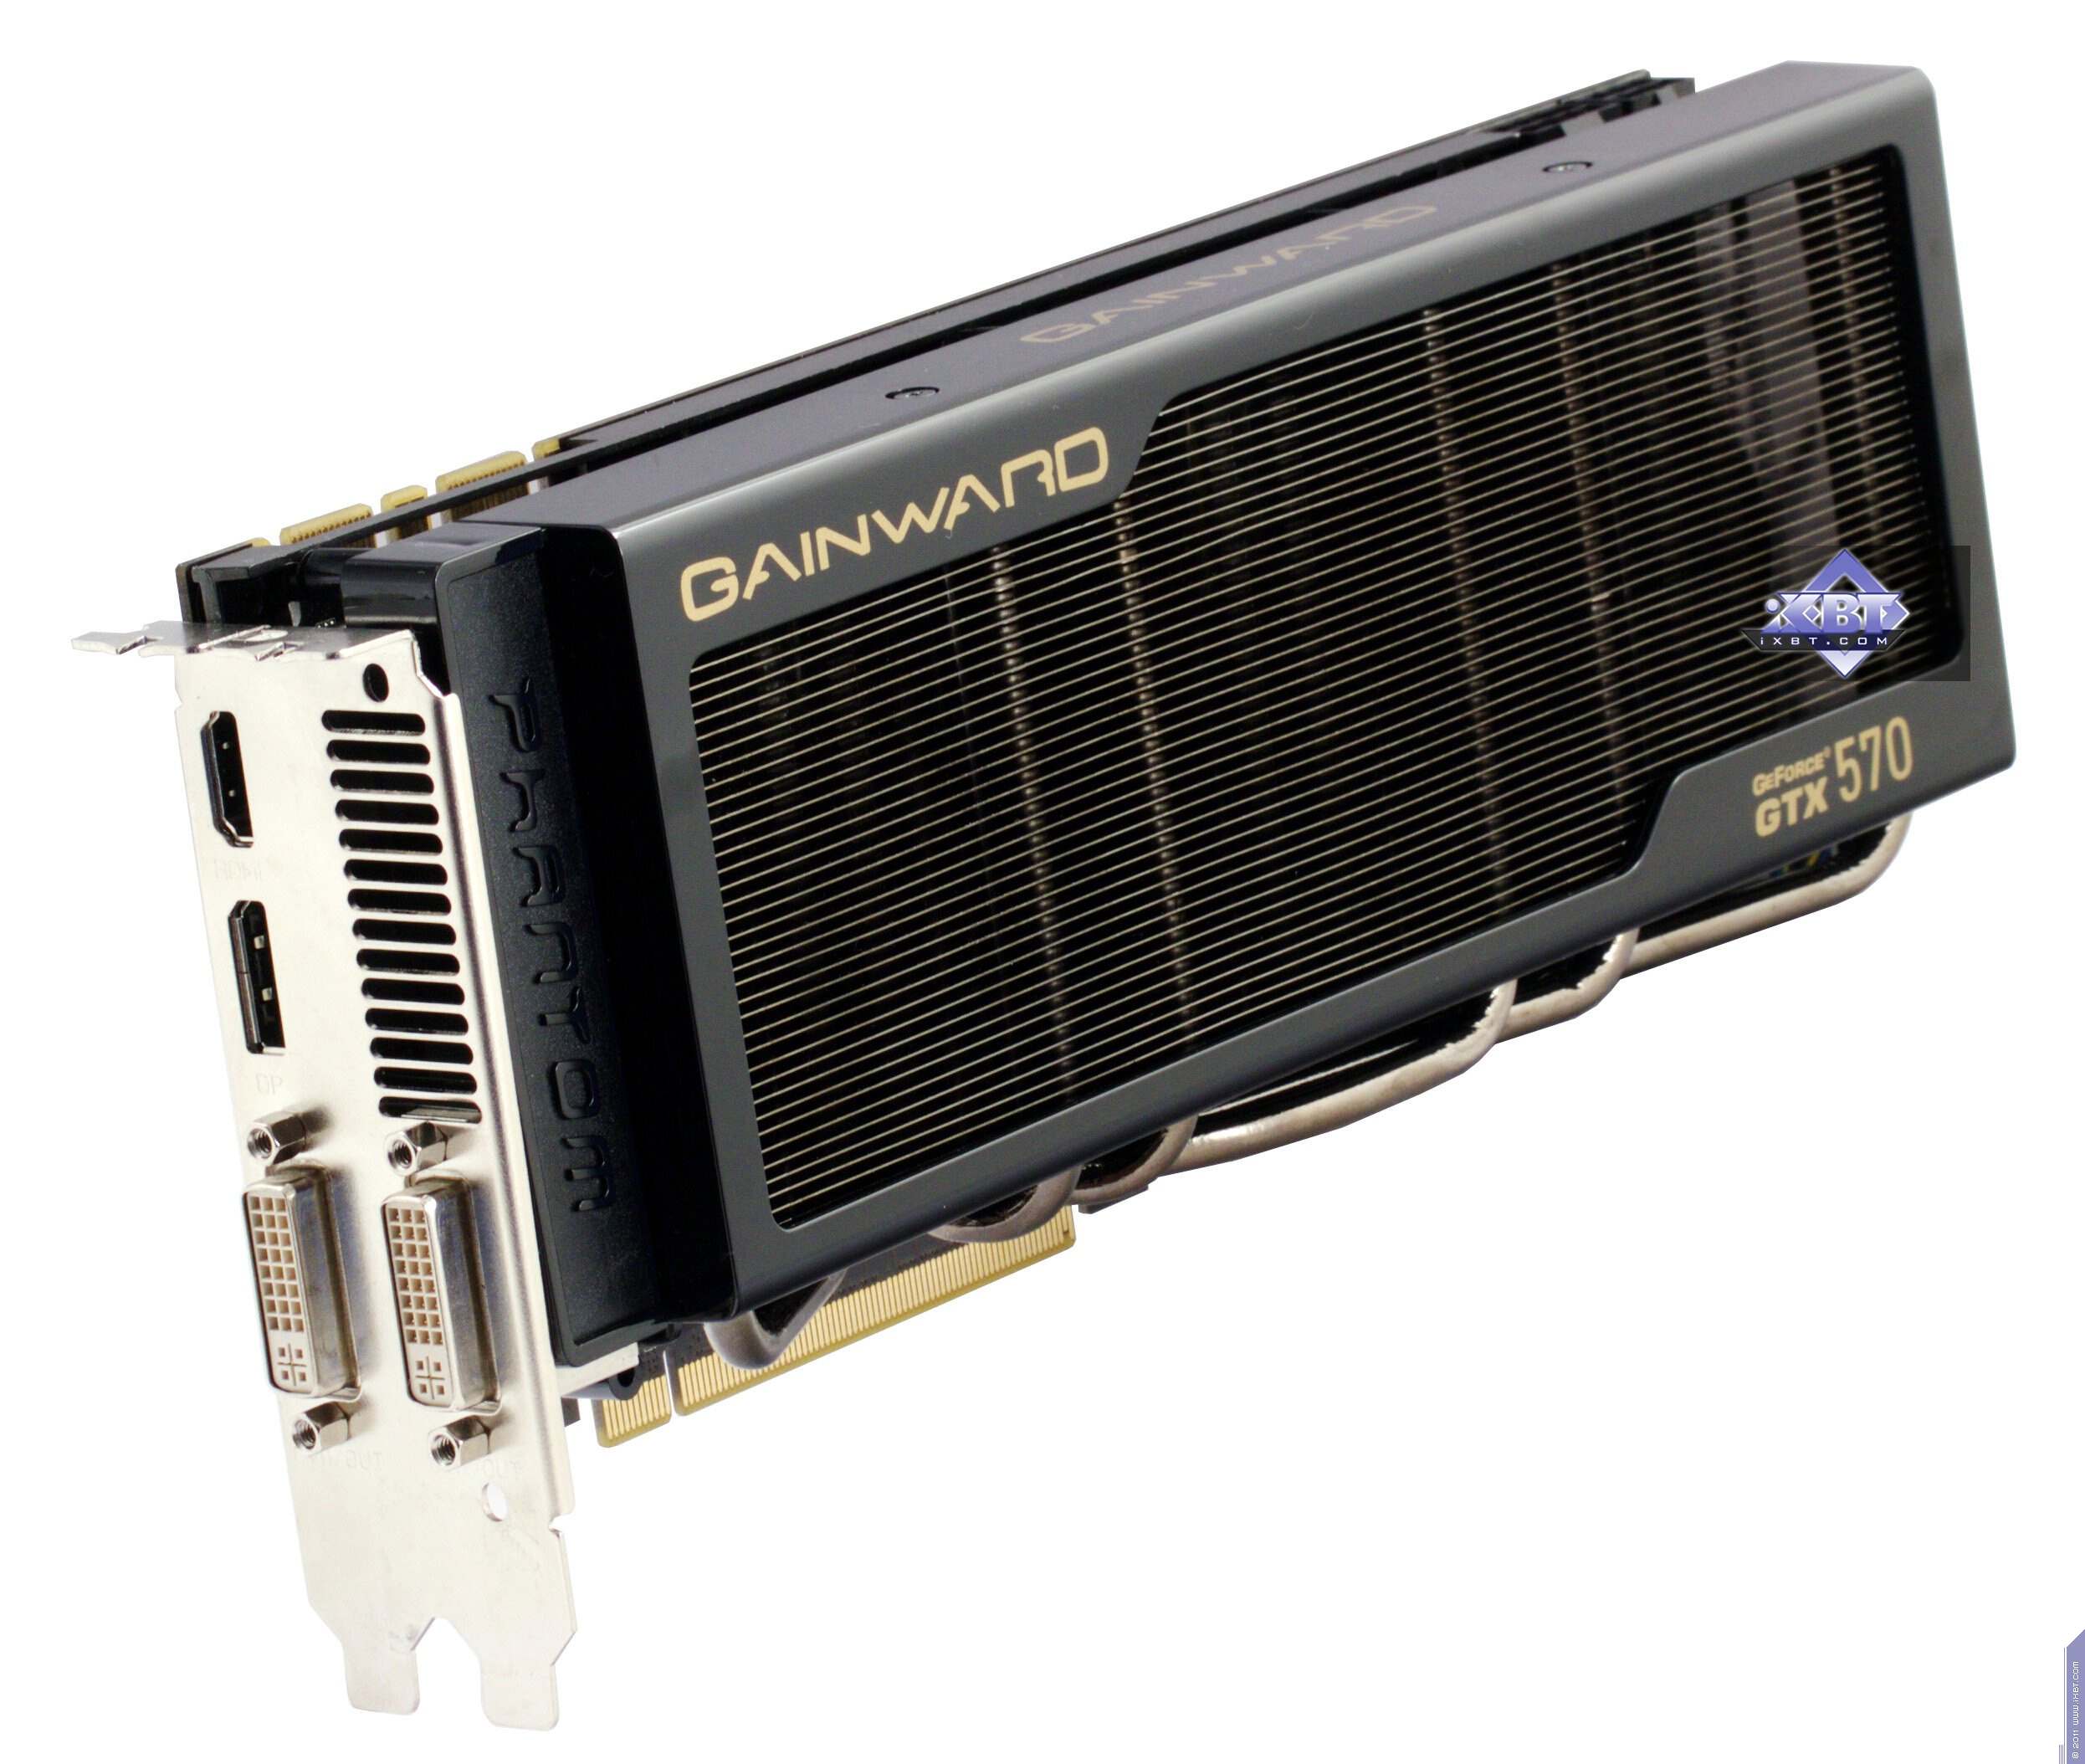 iXBT Labs - Gainward GeForce GTX 570 1280MB "Phantom" Graphics 1: Intro, design, cooling, bundle, box